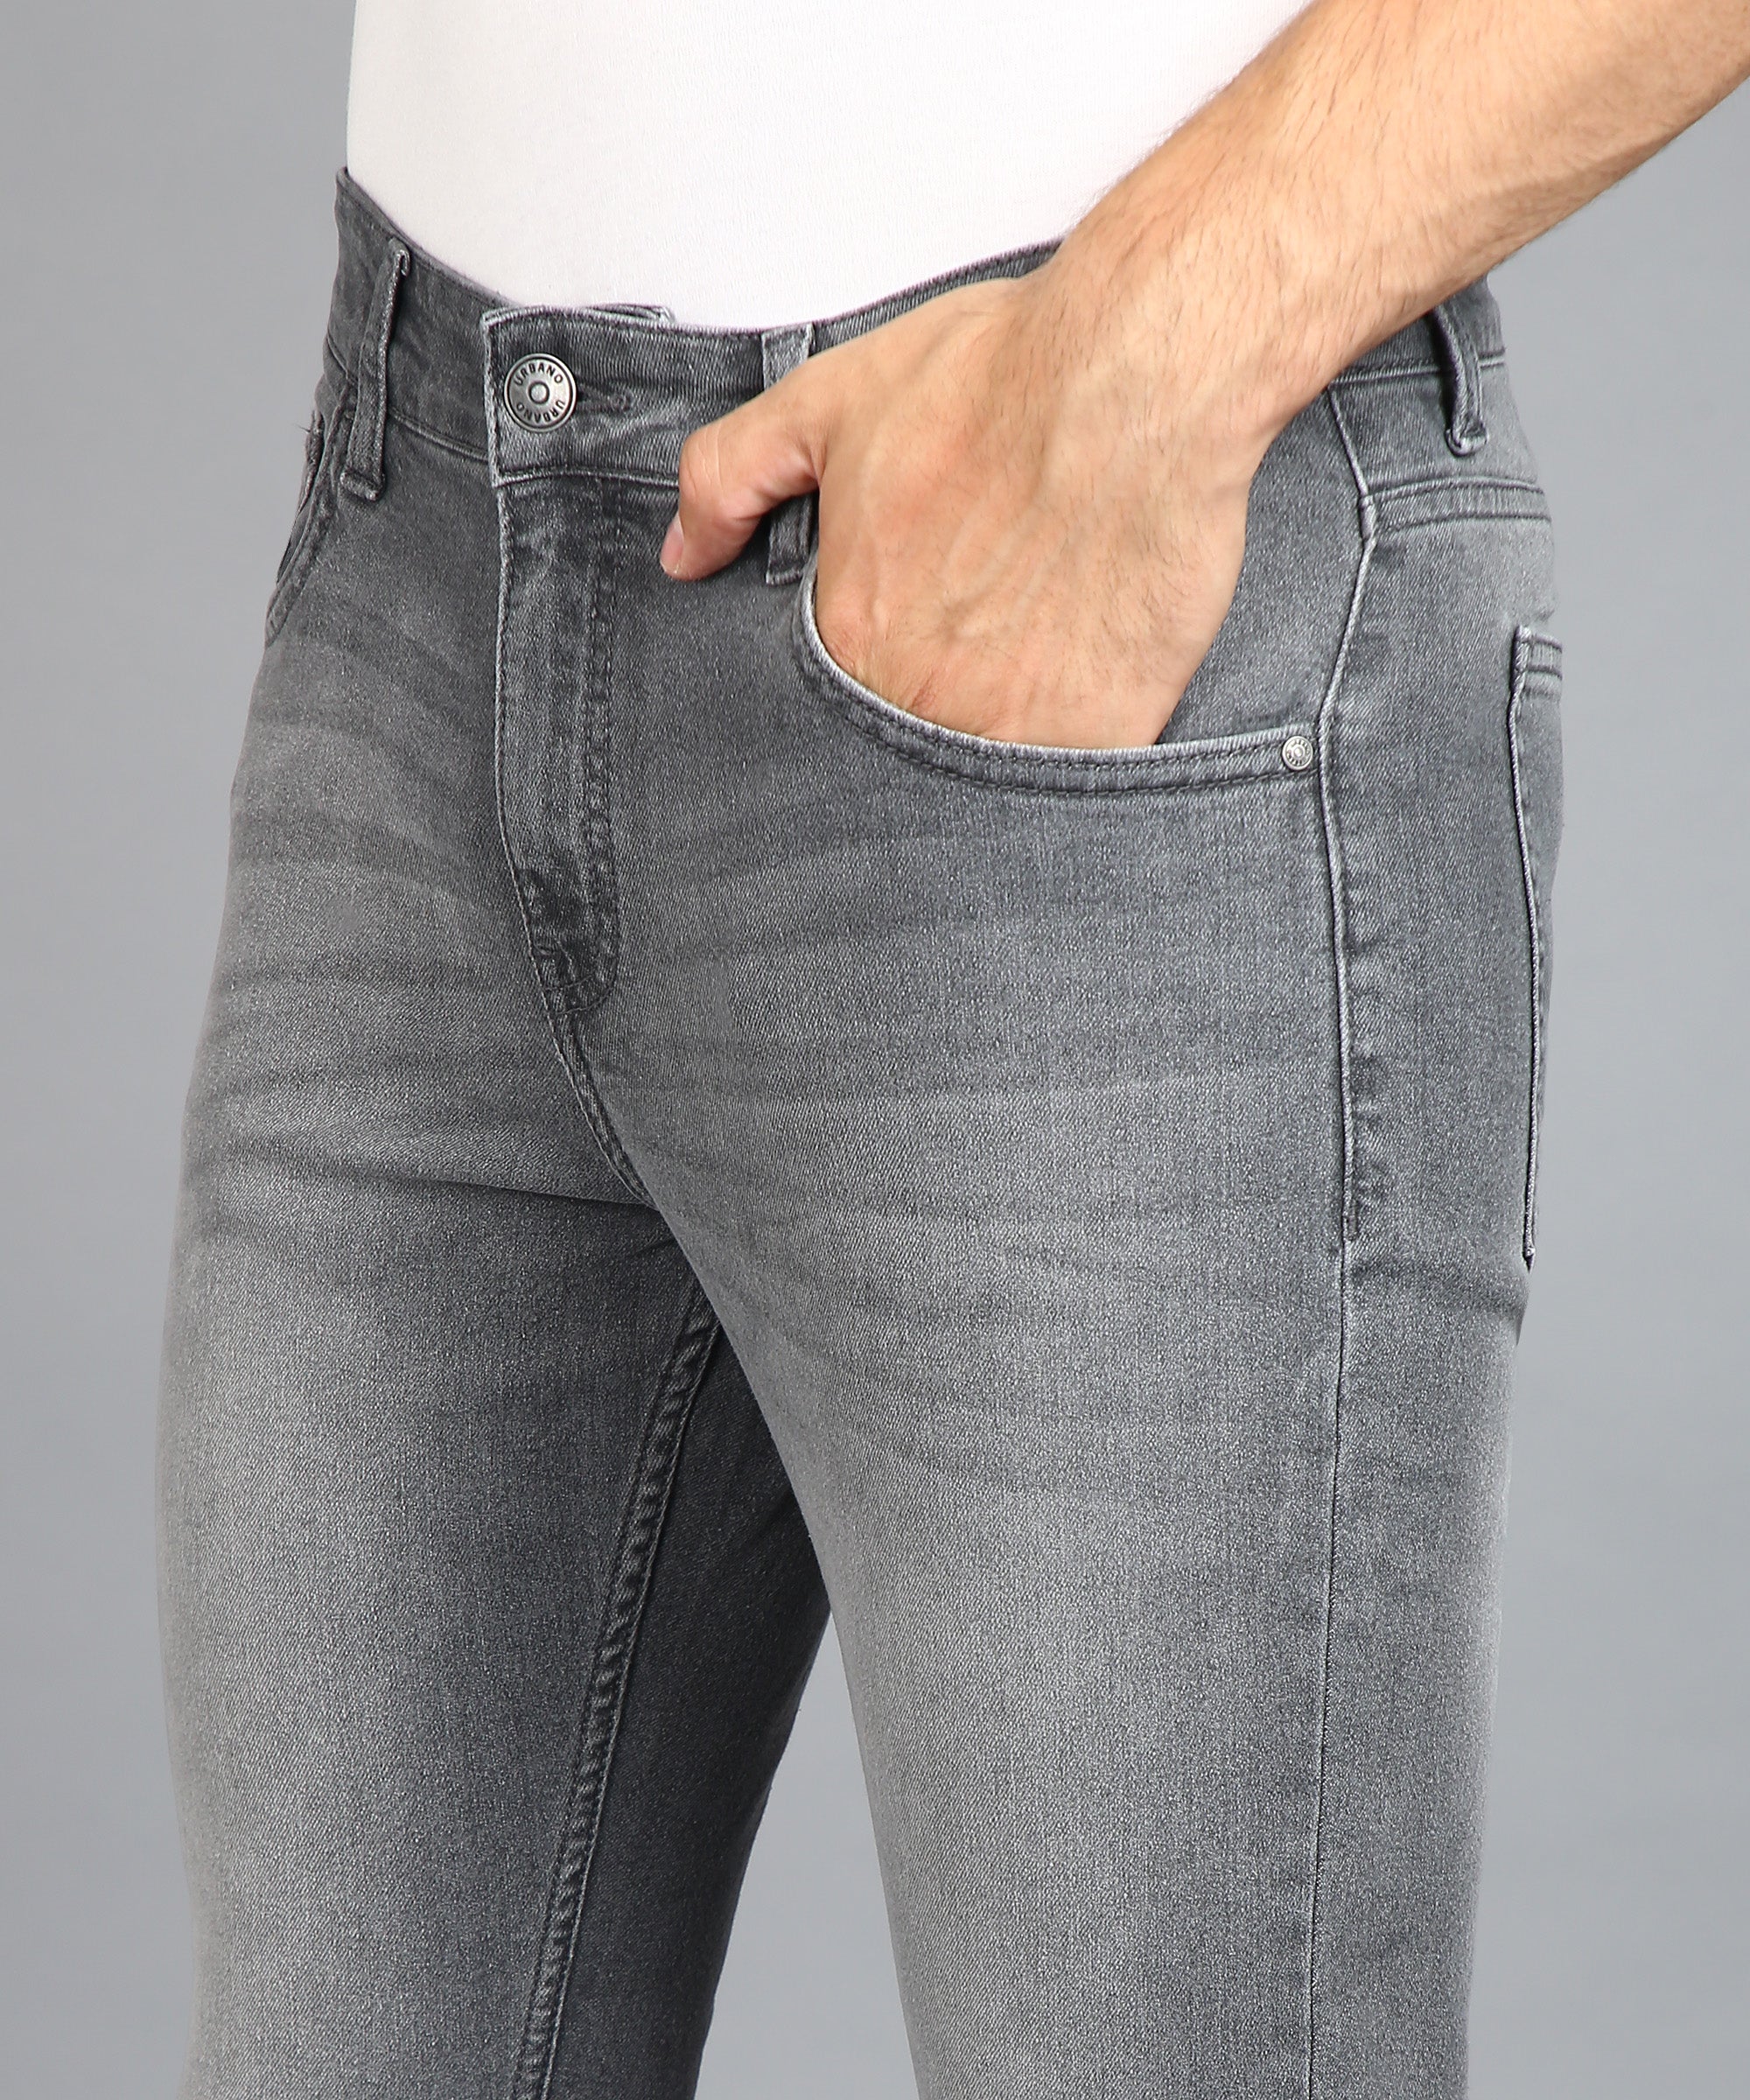 Urbano Fashion Men's Light Grey Regular Fit Washed Jeans Stretchable